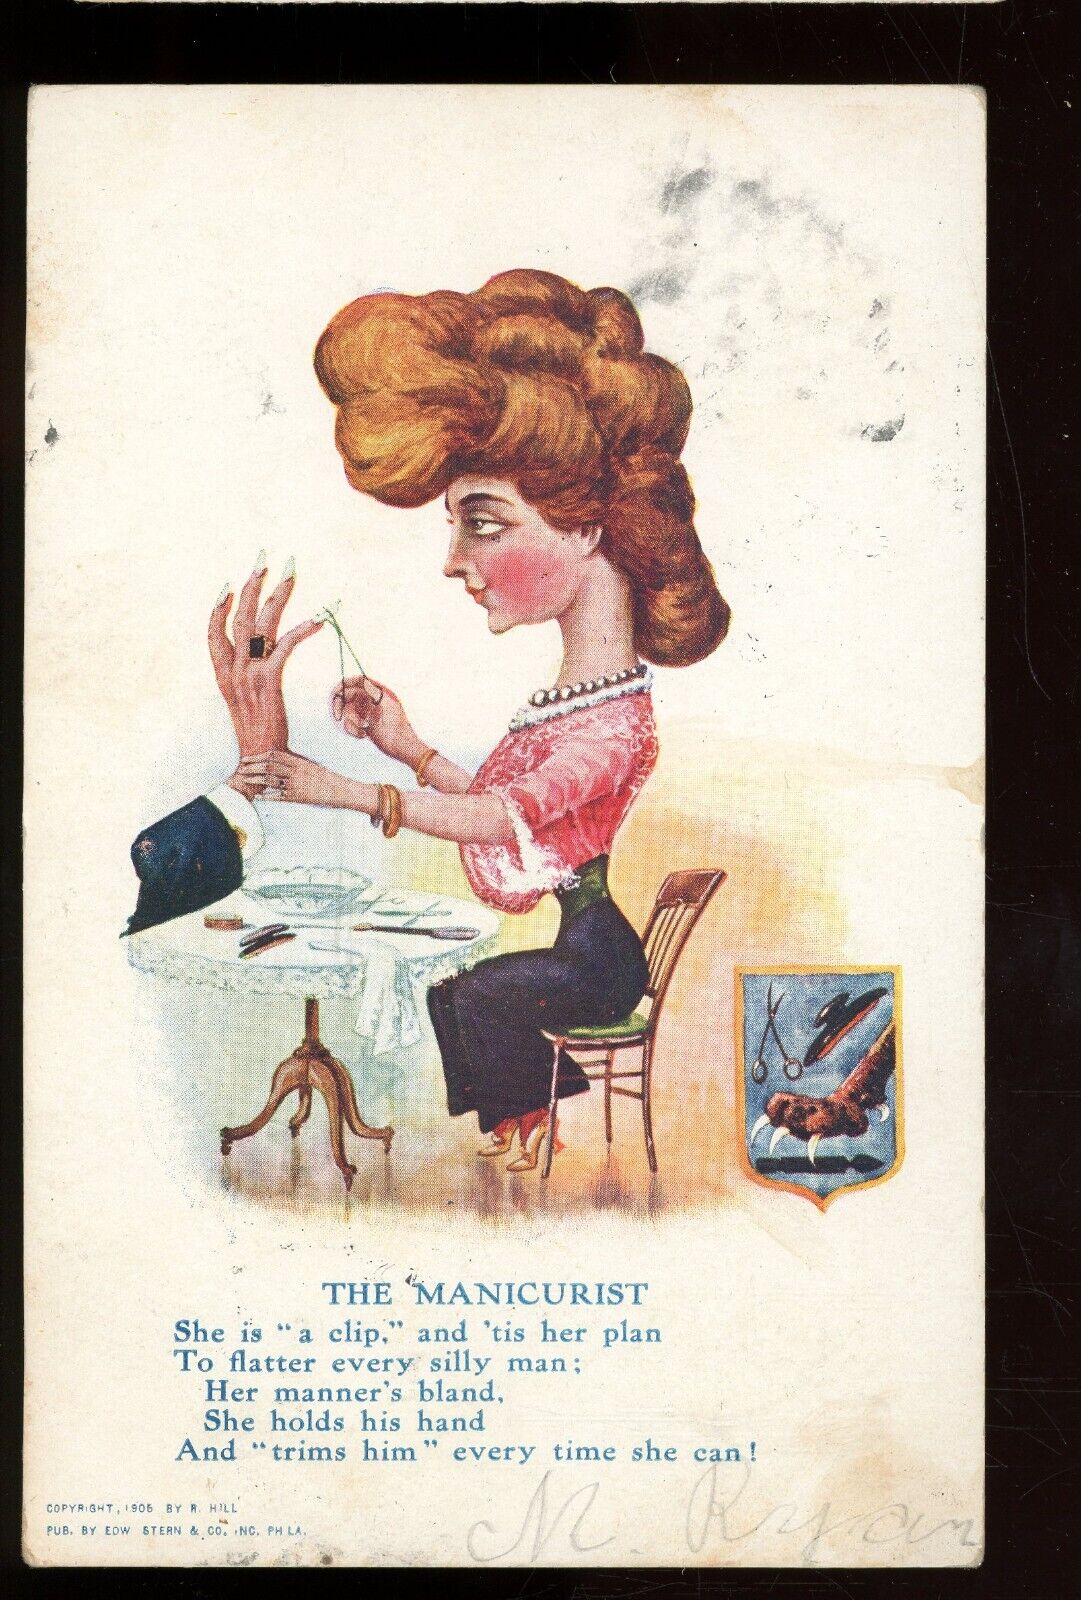 Manicurist-woman trims man every time-1907